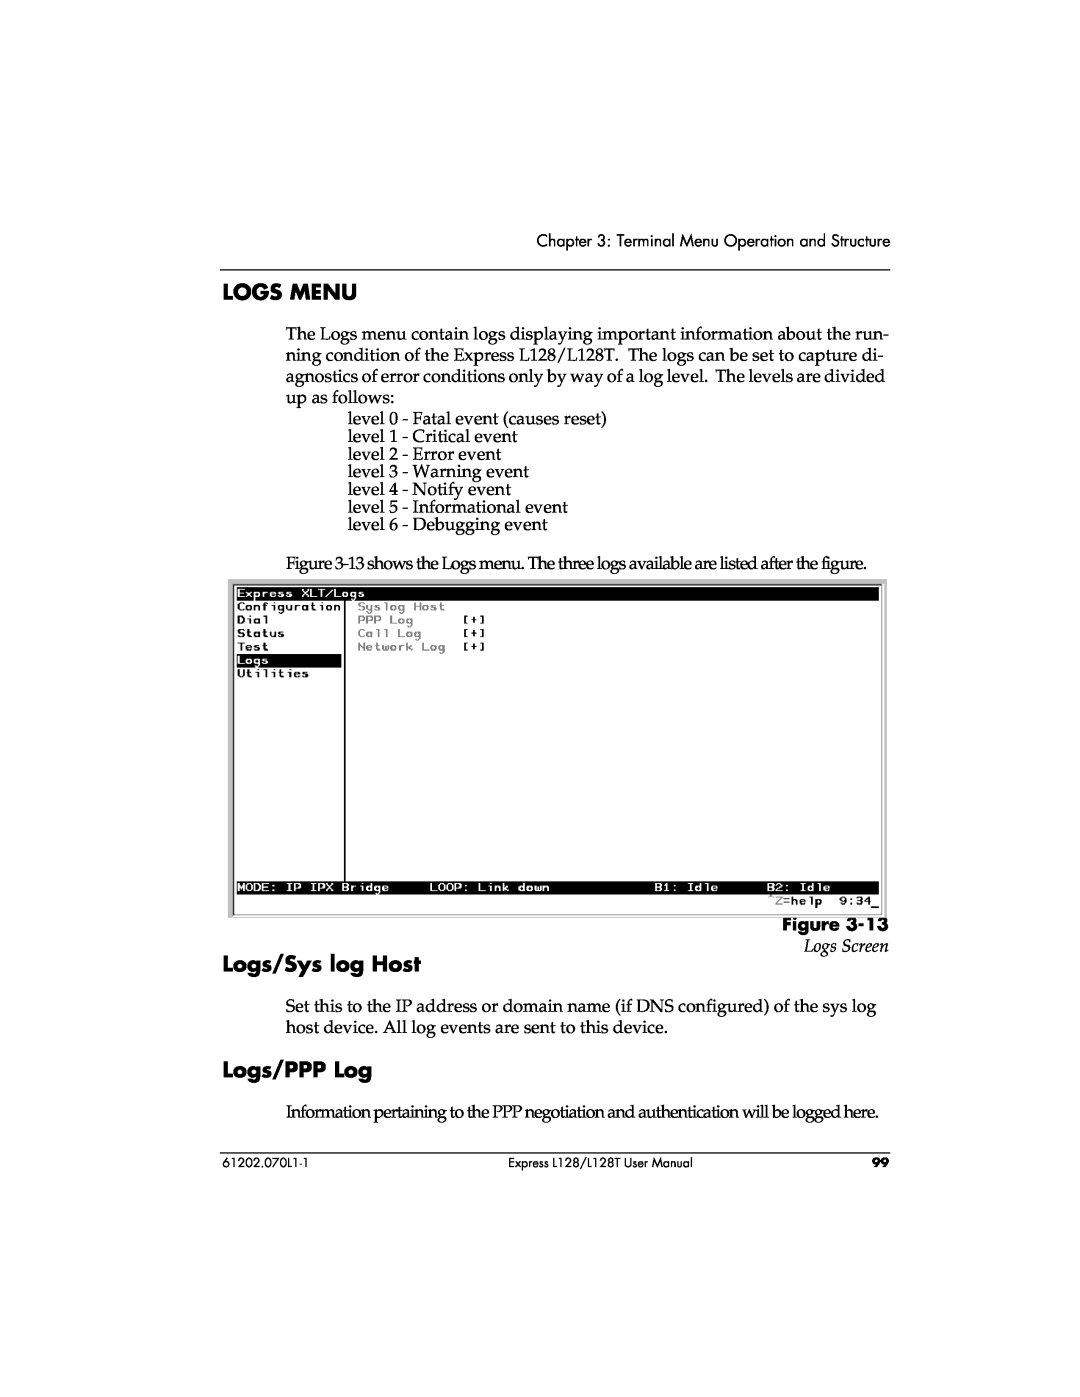 ADTRAN L128T user manual Logs Menu, Logs/Sys log Host, Logs/PPP Log, Logs Screen 